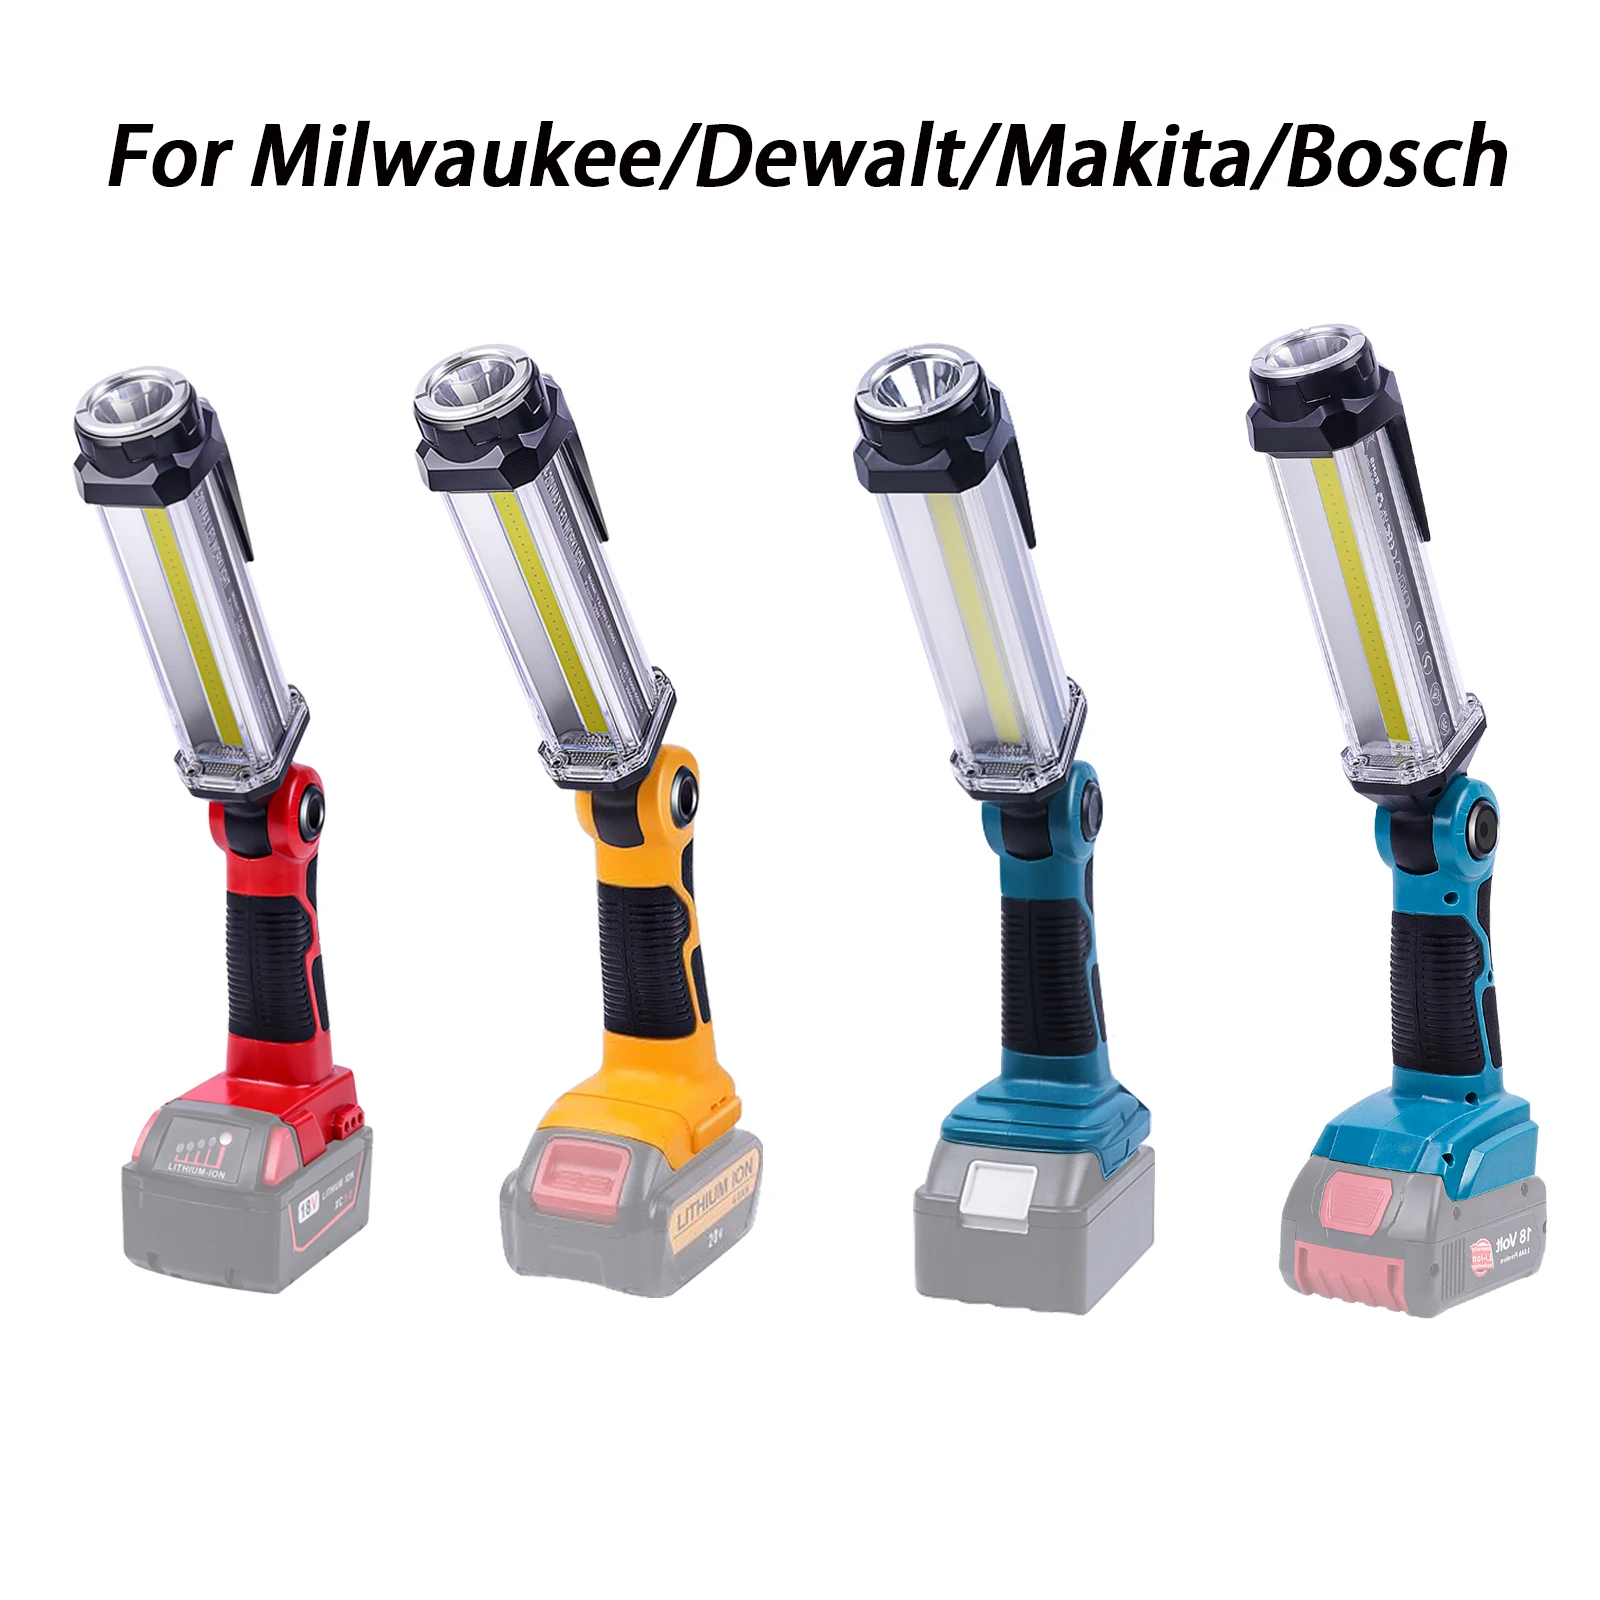 

2000LM LED Work Light for Milwaukee/Dewalt/Makita/Bosch 14.4V-18V Li-ion Battery Outdoor Camping Portable Flashlight